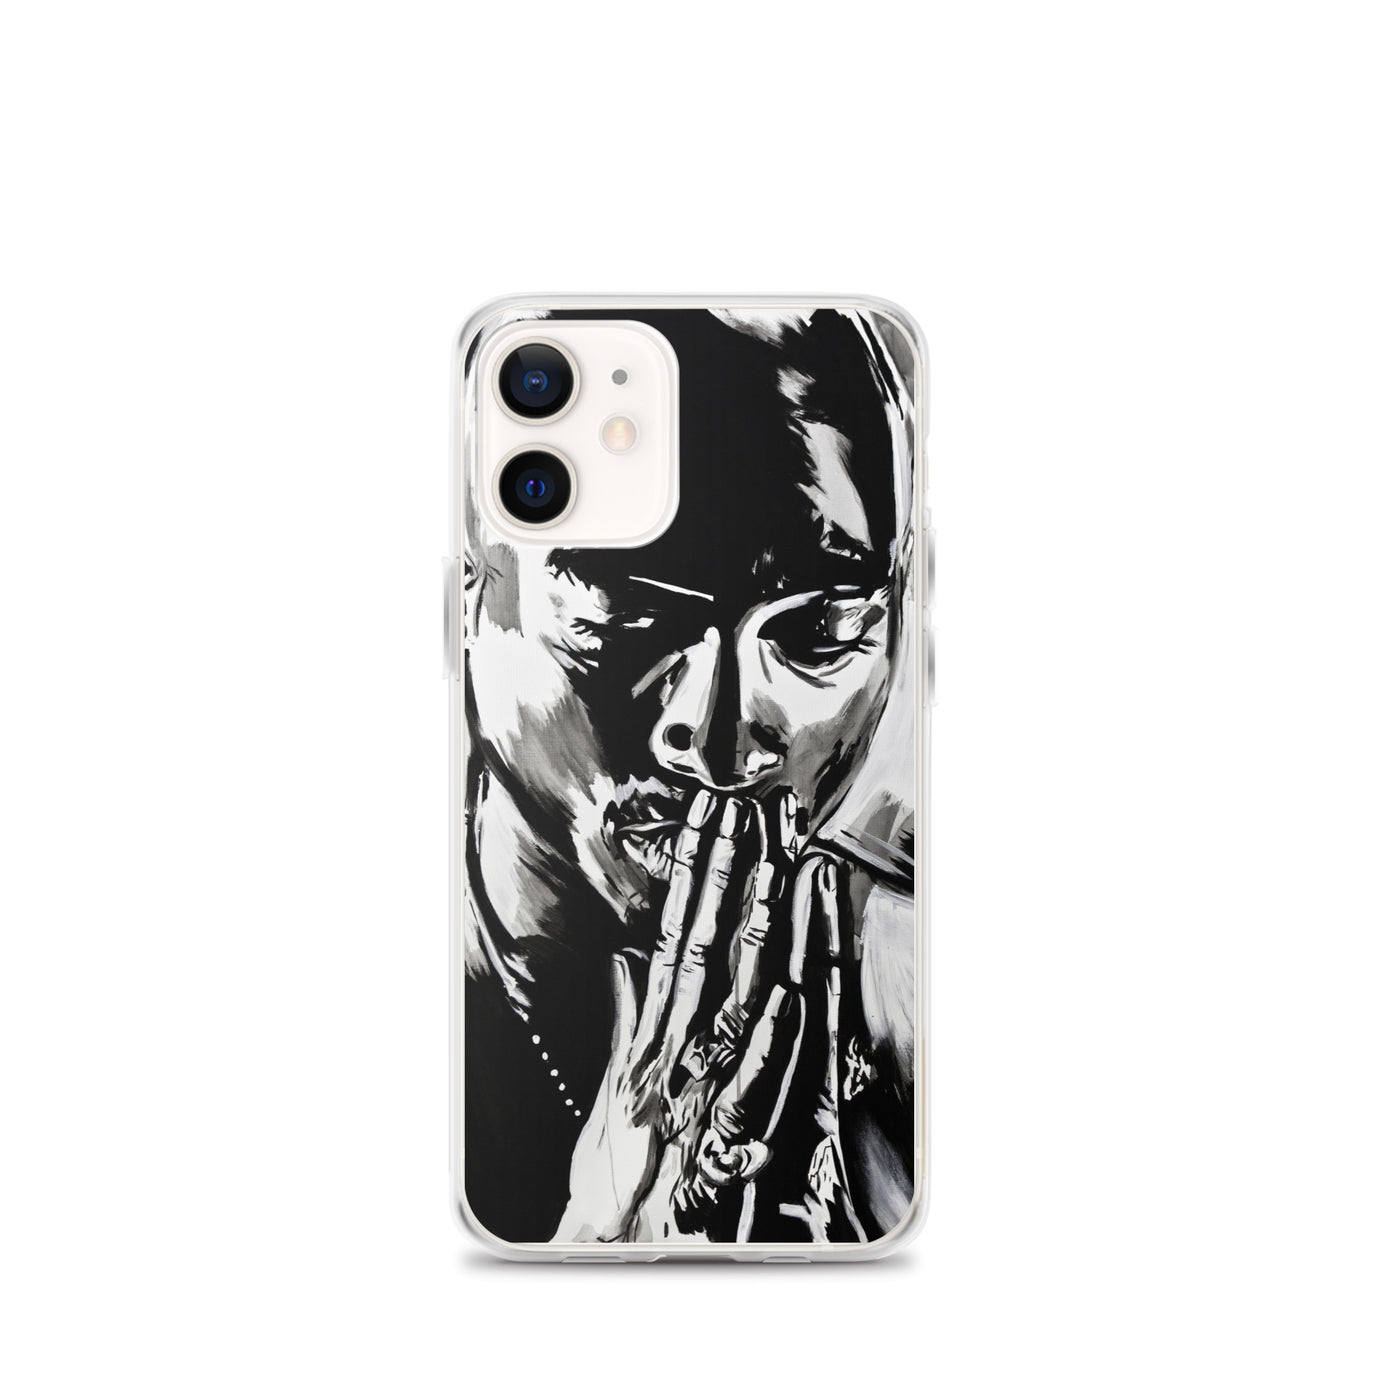 Tupac Black & White iPhone Case